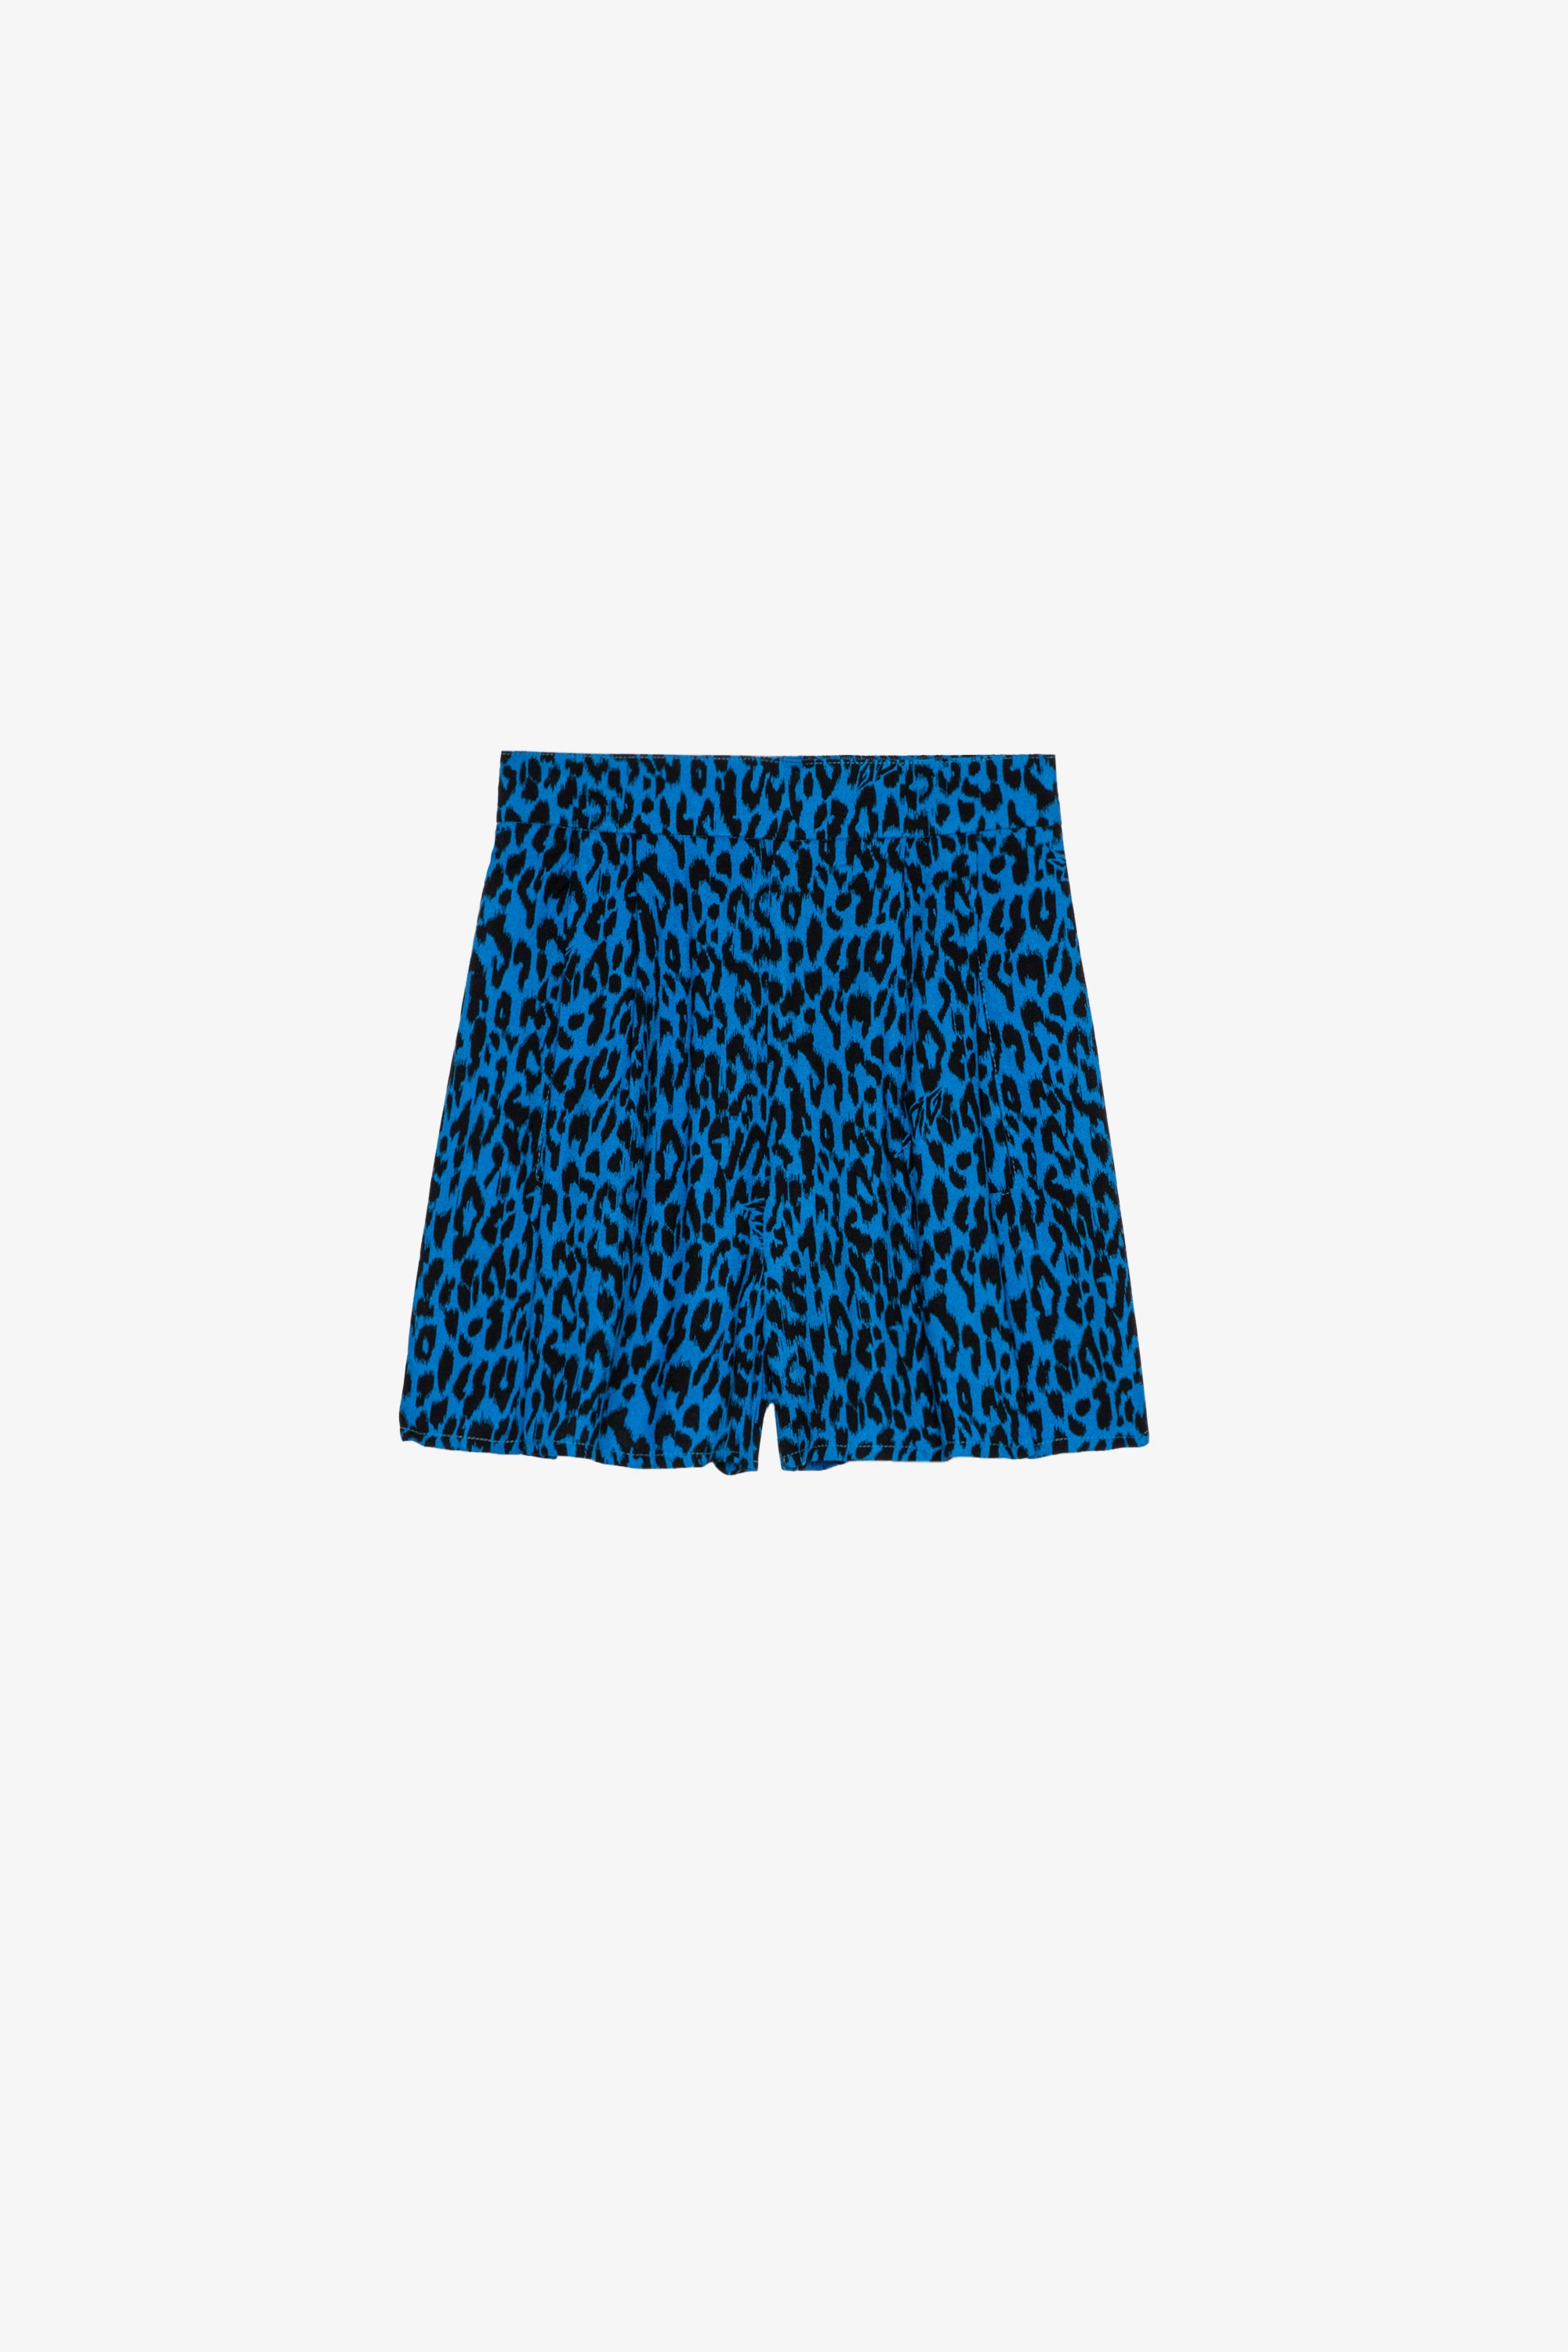 Nicole Kids' Shorts Kids' shorts in blue leopard-print crêpe